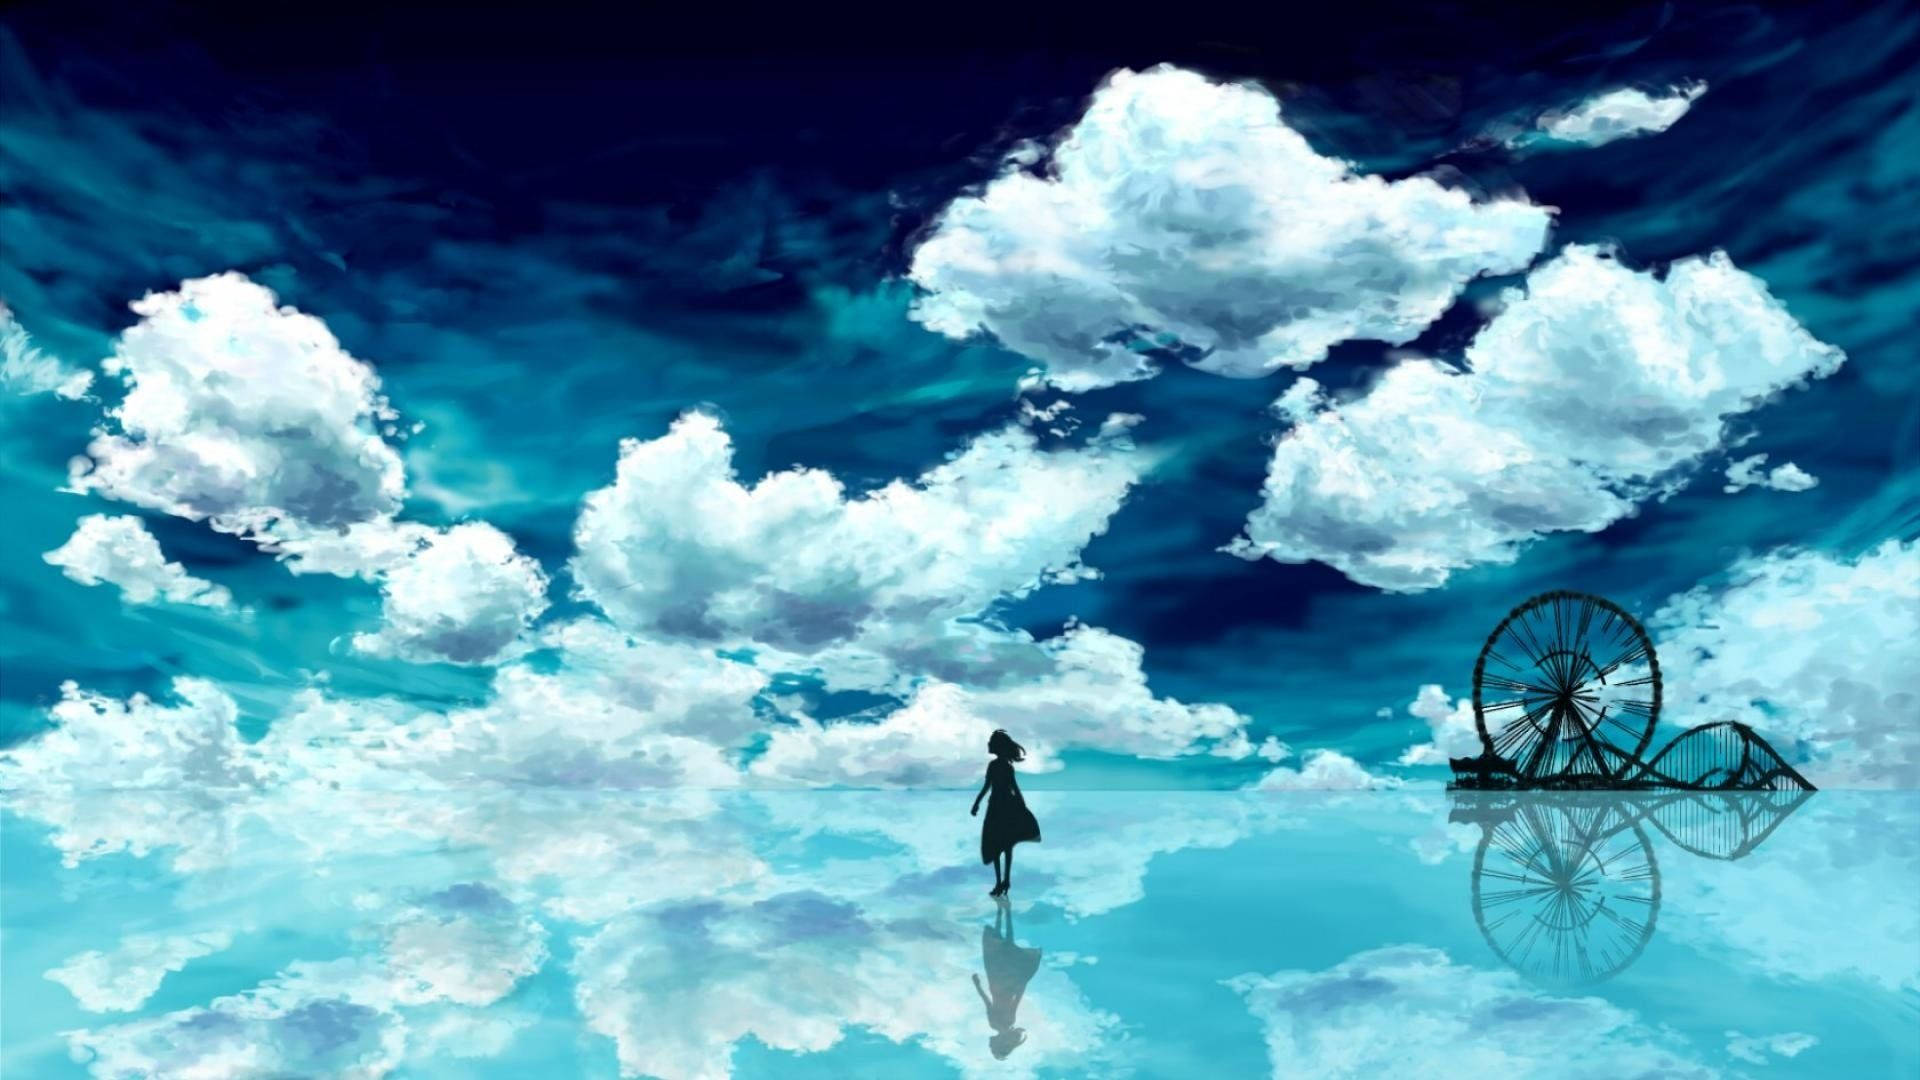 Anime Blue Sky Background